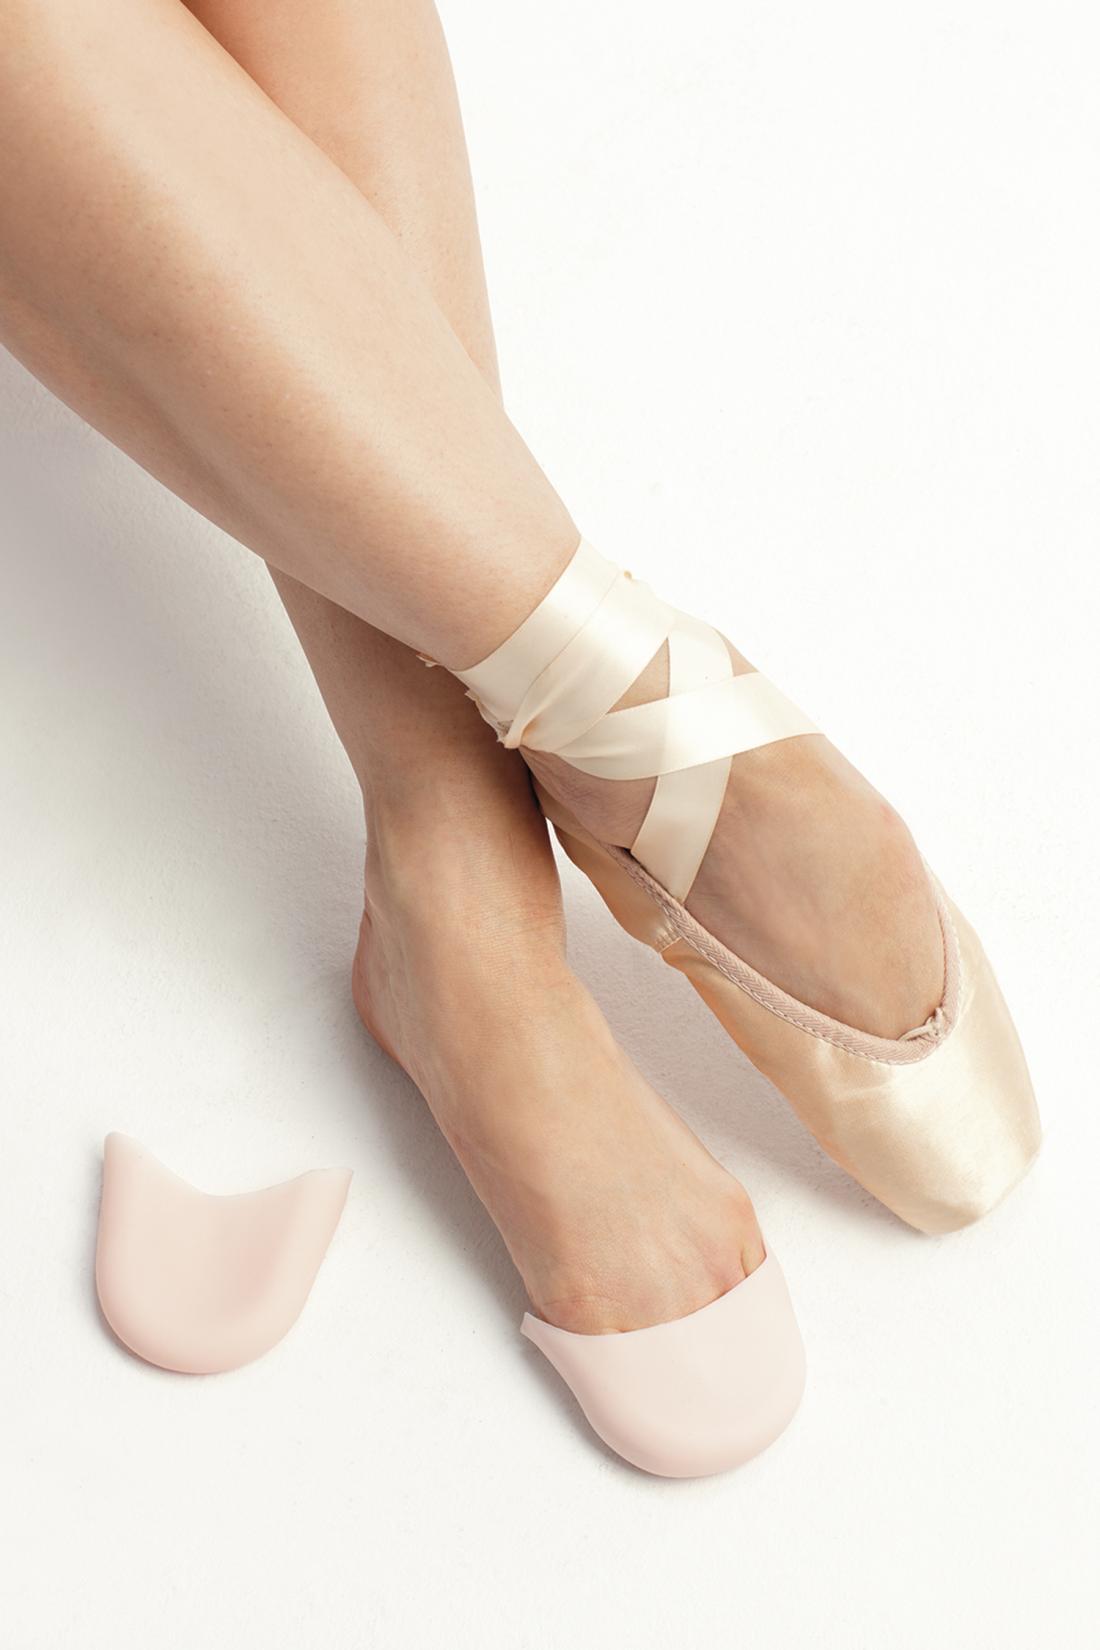 Pointe Shoes Silicone Toe Pads Intermezzo Ballet Protectors